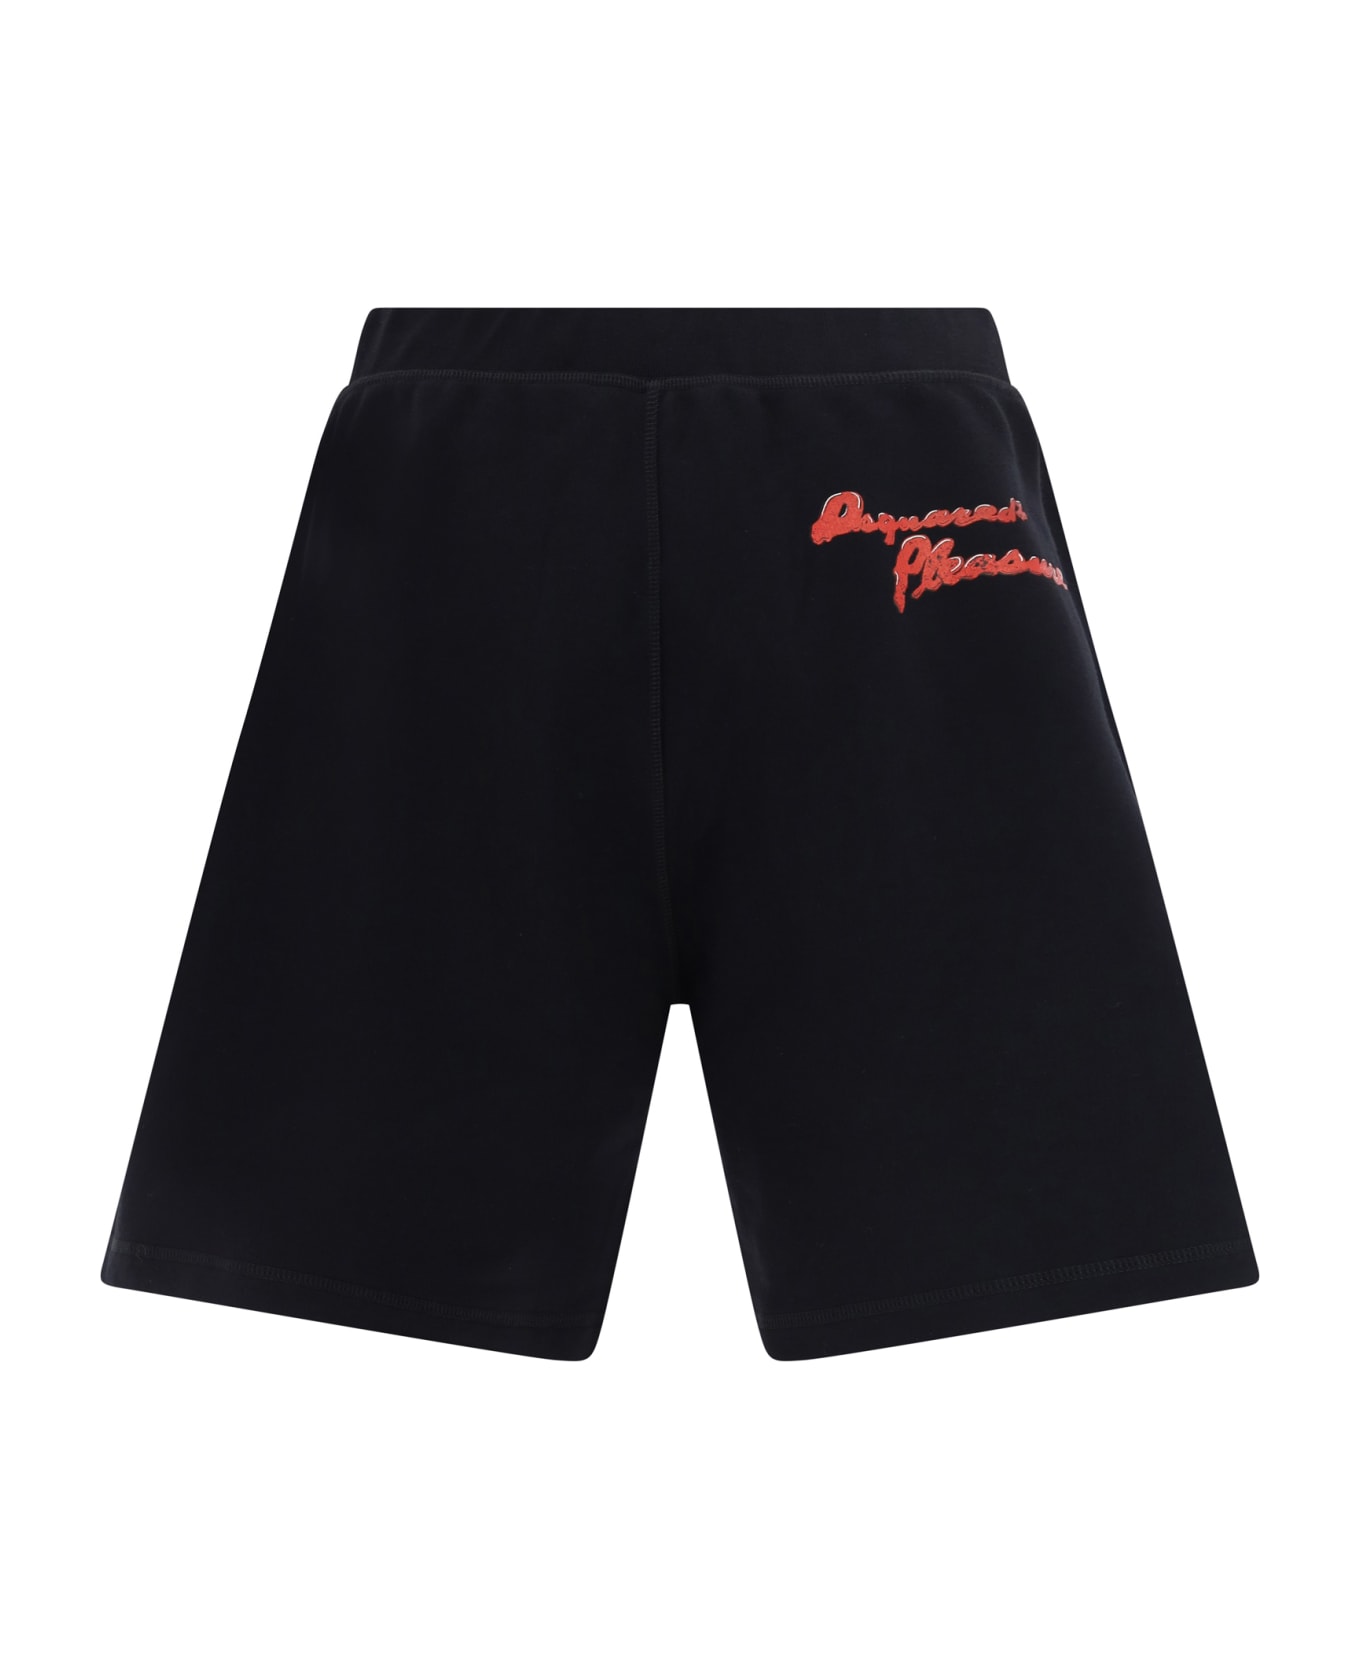 Dsquared2 Shorts - Black ショートパンツ